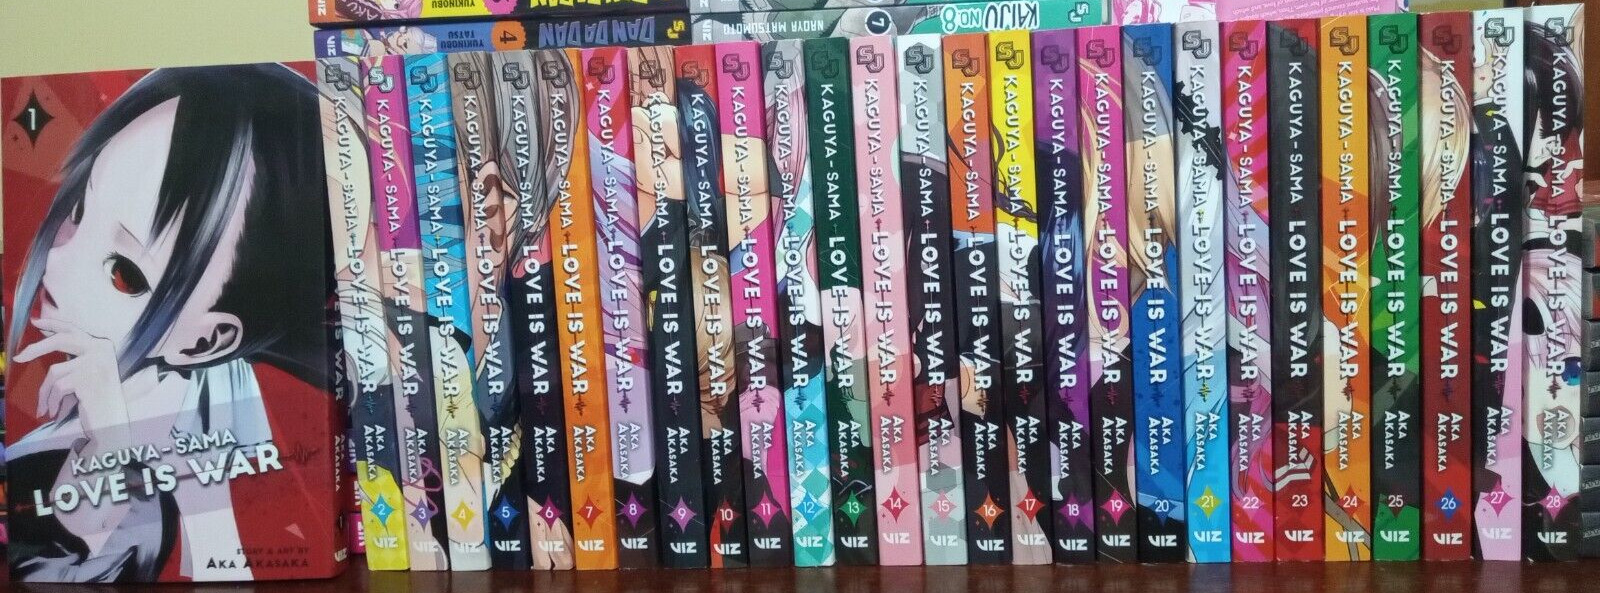 Kaguya sama: Love is War Vol. 1-28 Complete manga set English Aka Akasaka *NEW*